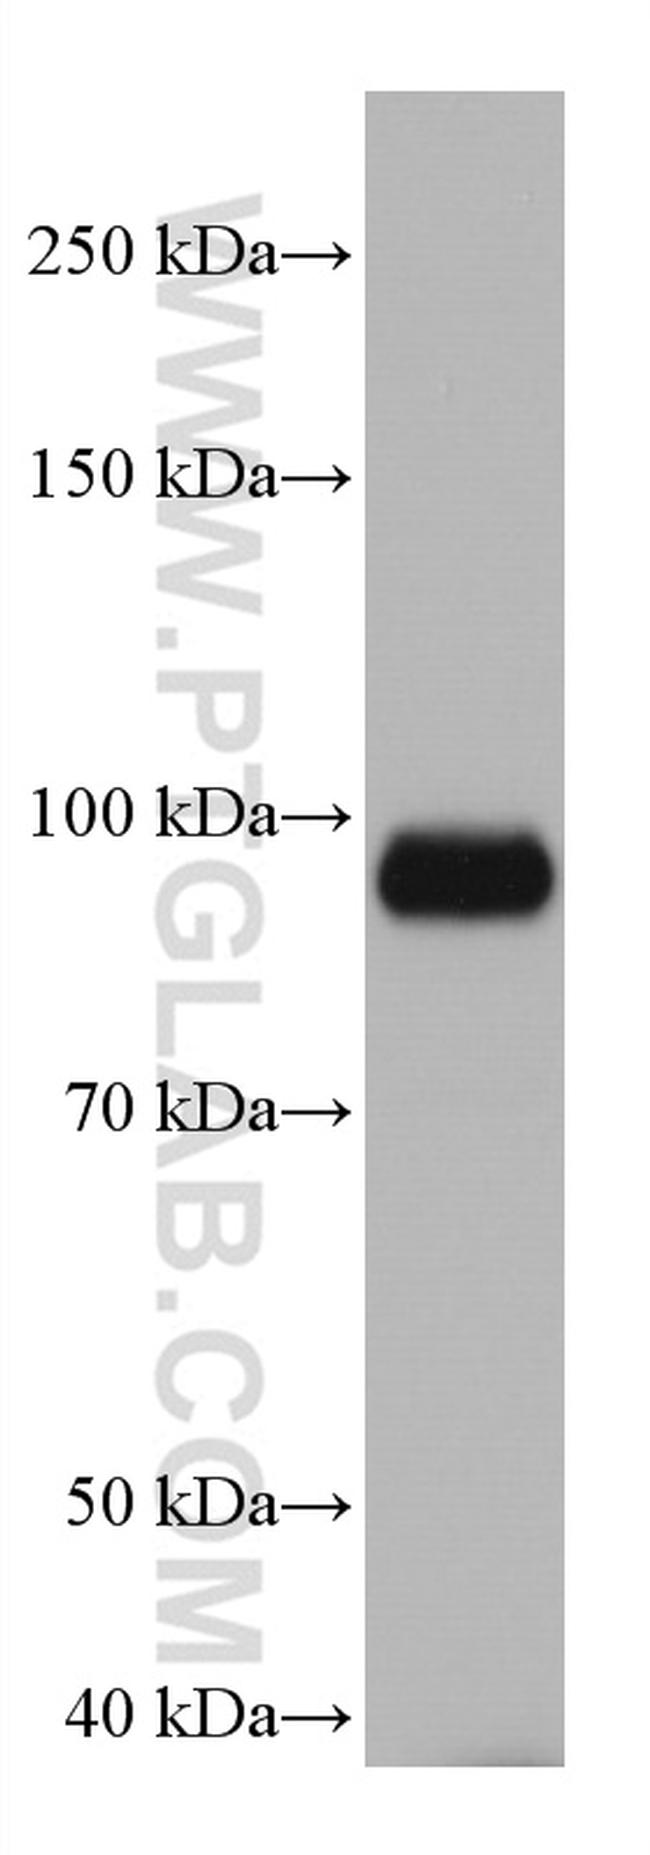 DLG3 Antibody in Western Blot (WB)